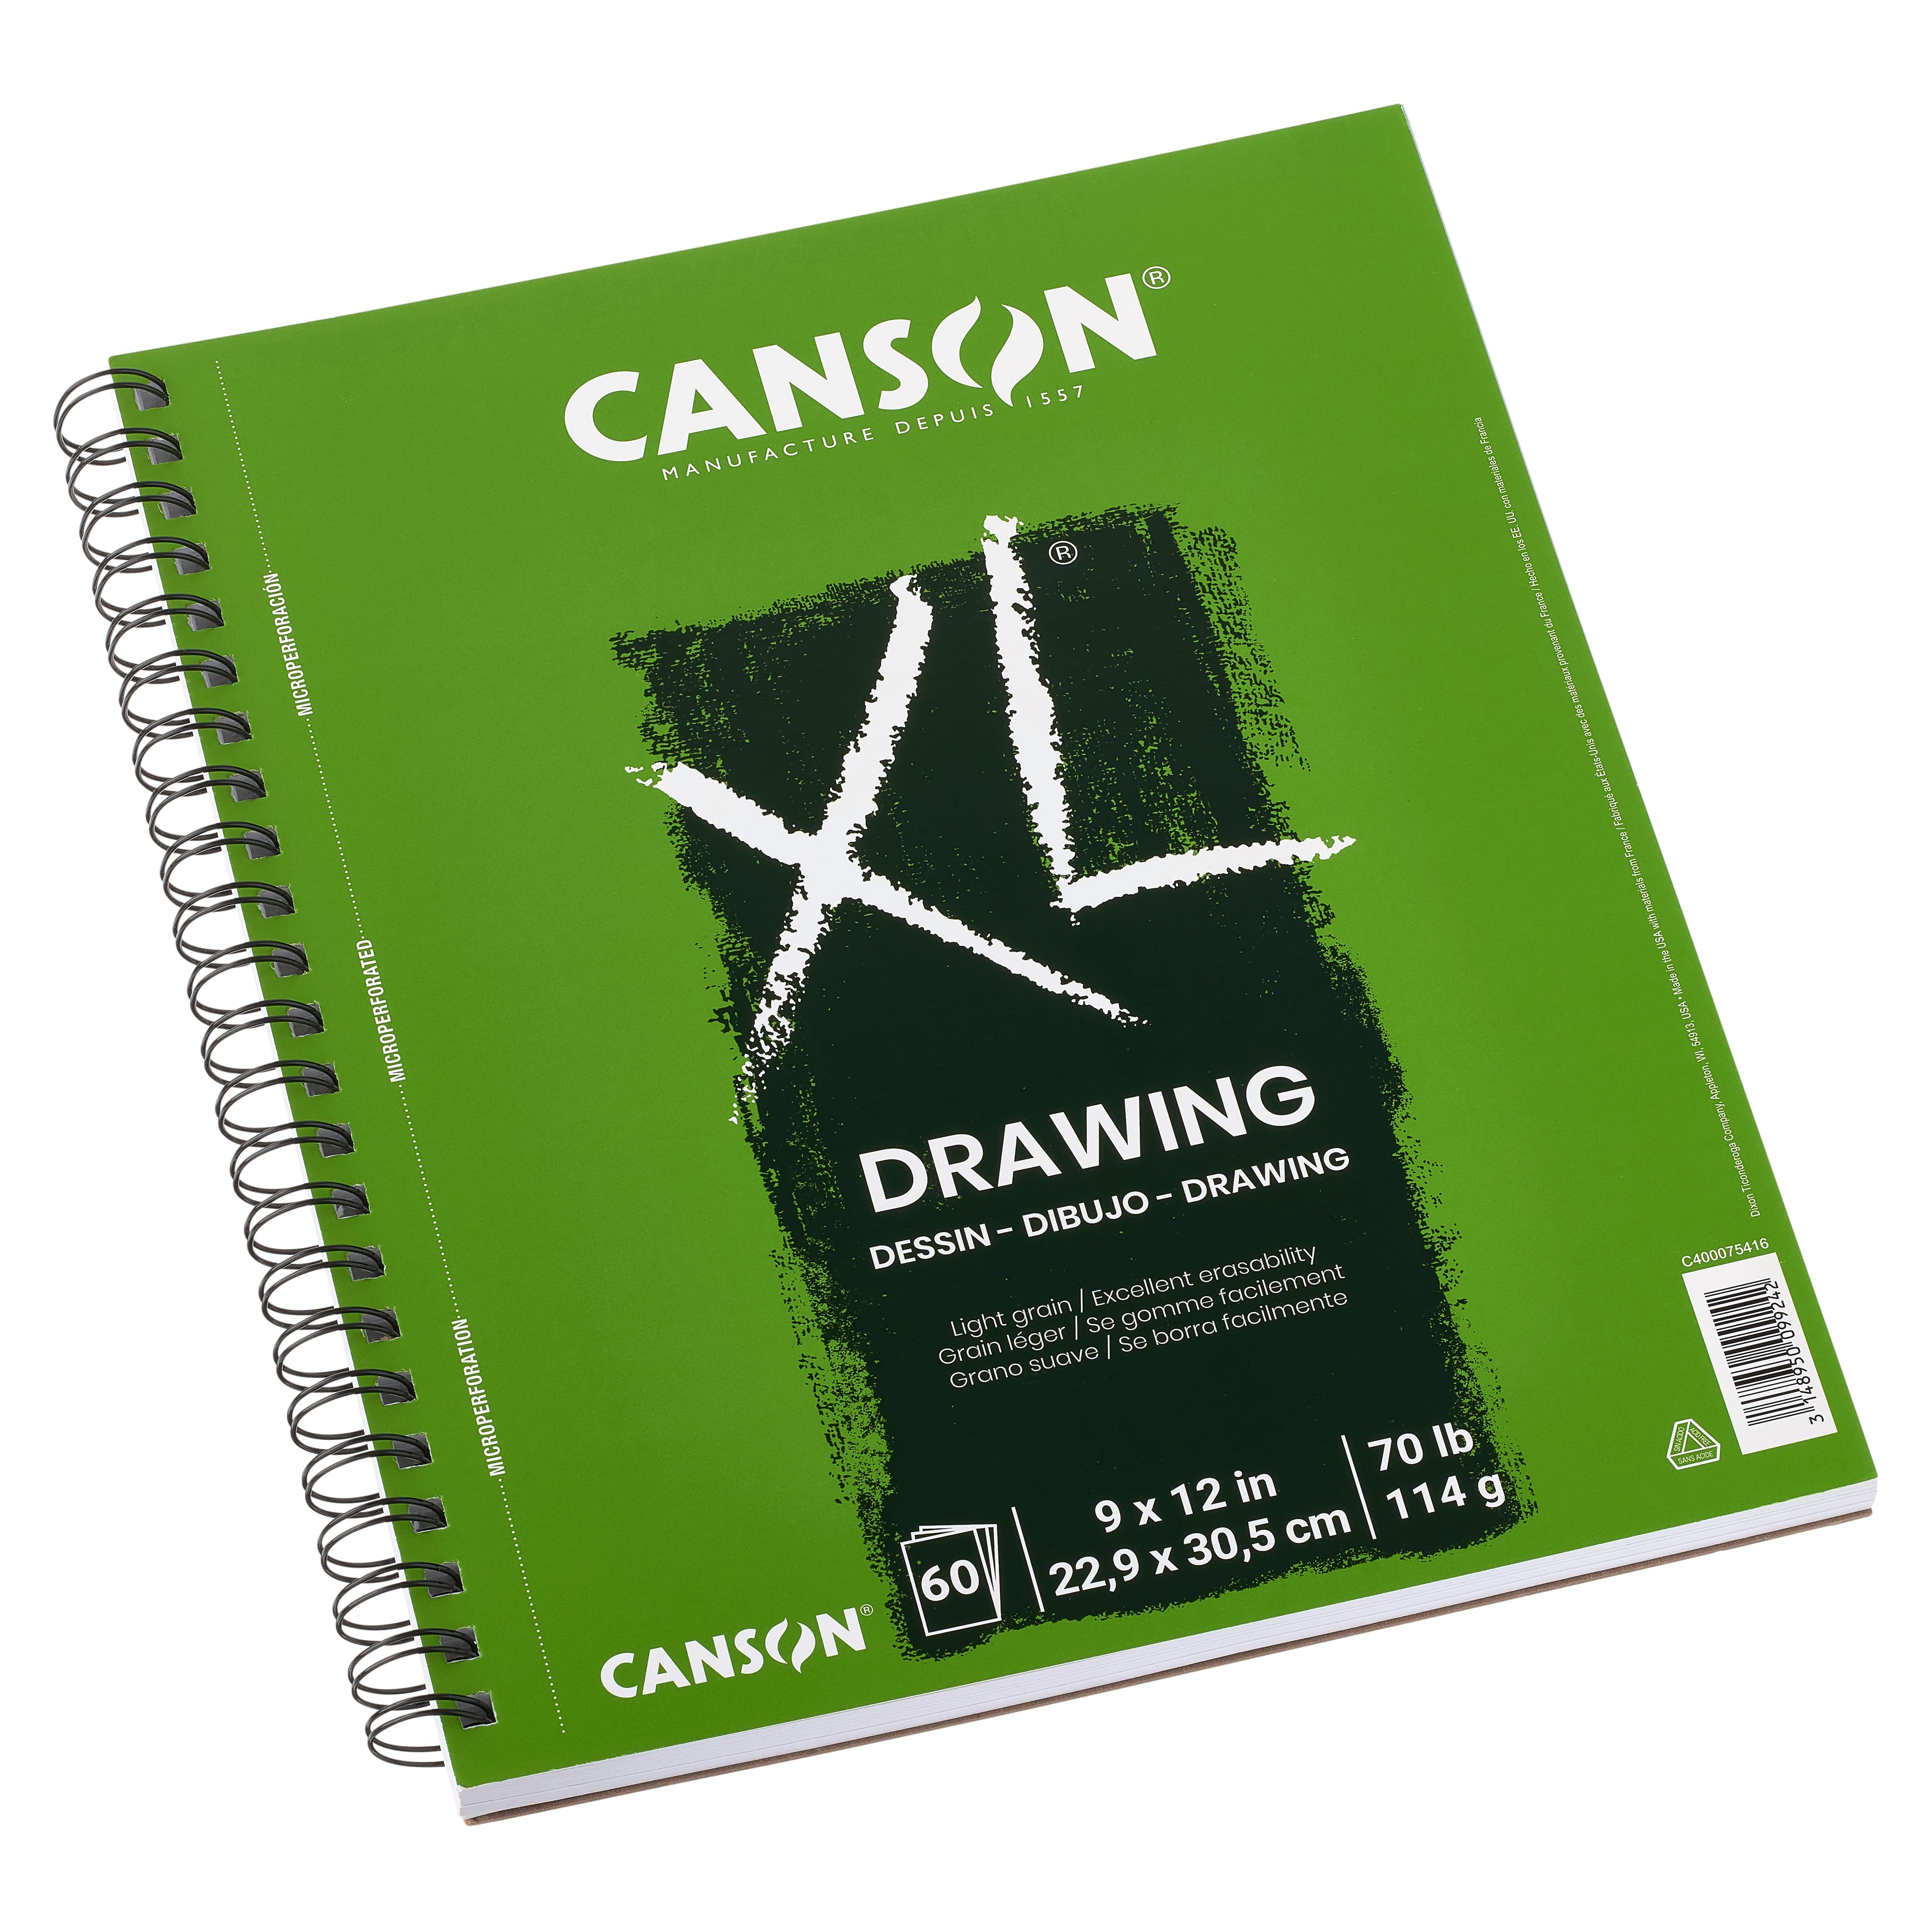 Black Paper Sketchbook: Big Sketchbook for Doodling & Drawing With Gel,,  Metallic, Sharpies or Neon Highlighter Pens (Blank Drawing Books) - Yahoo  Shopping